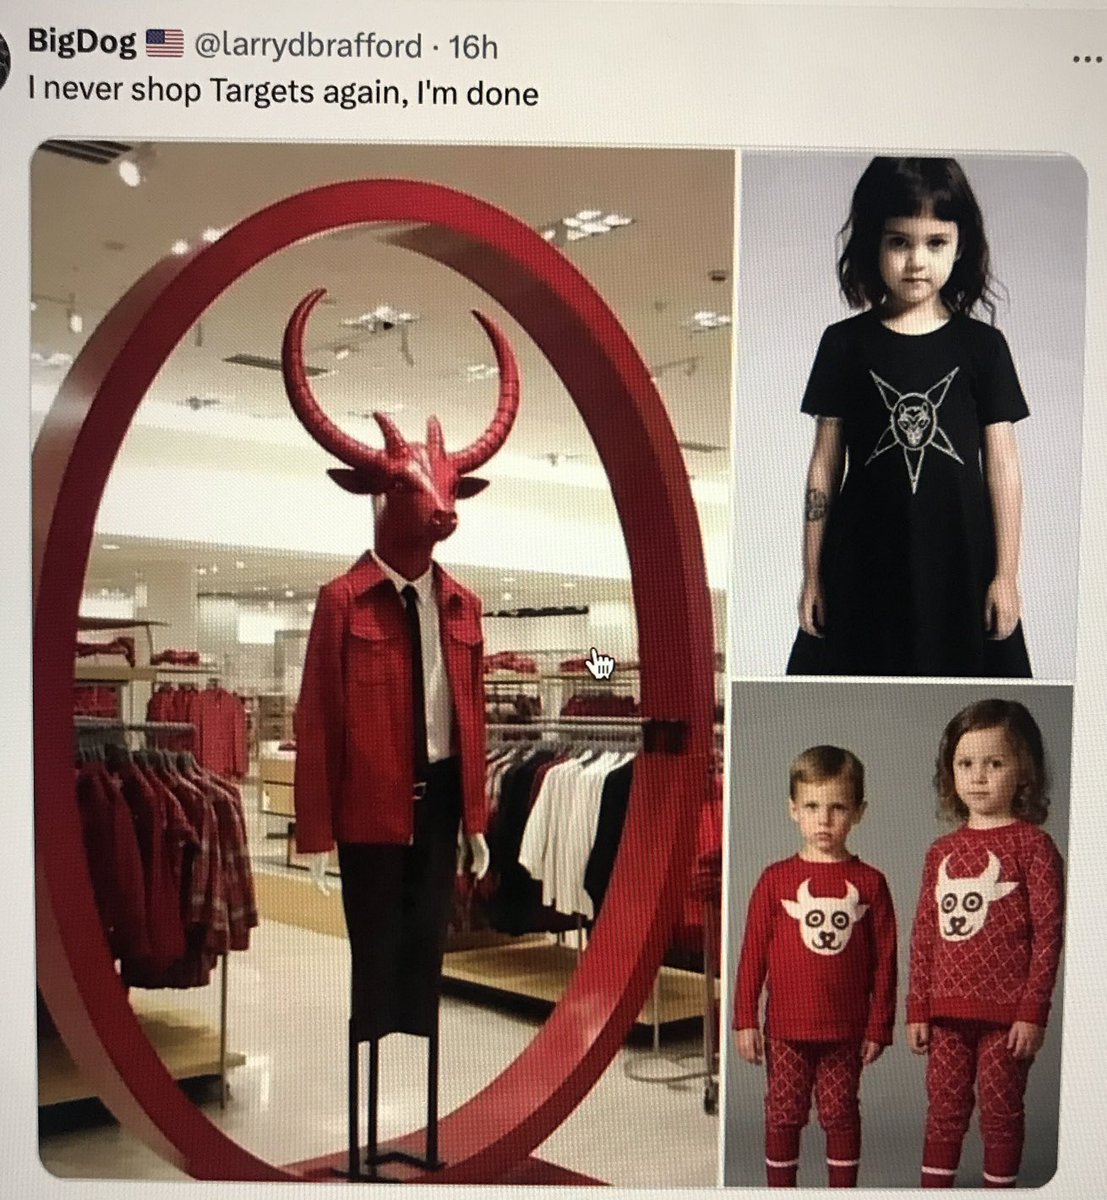 Moloch, the devil pentagram and panda eyes .. pedo promotion.. 
#boycotttarget